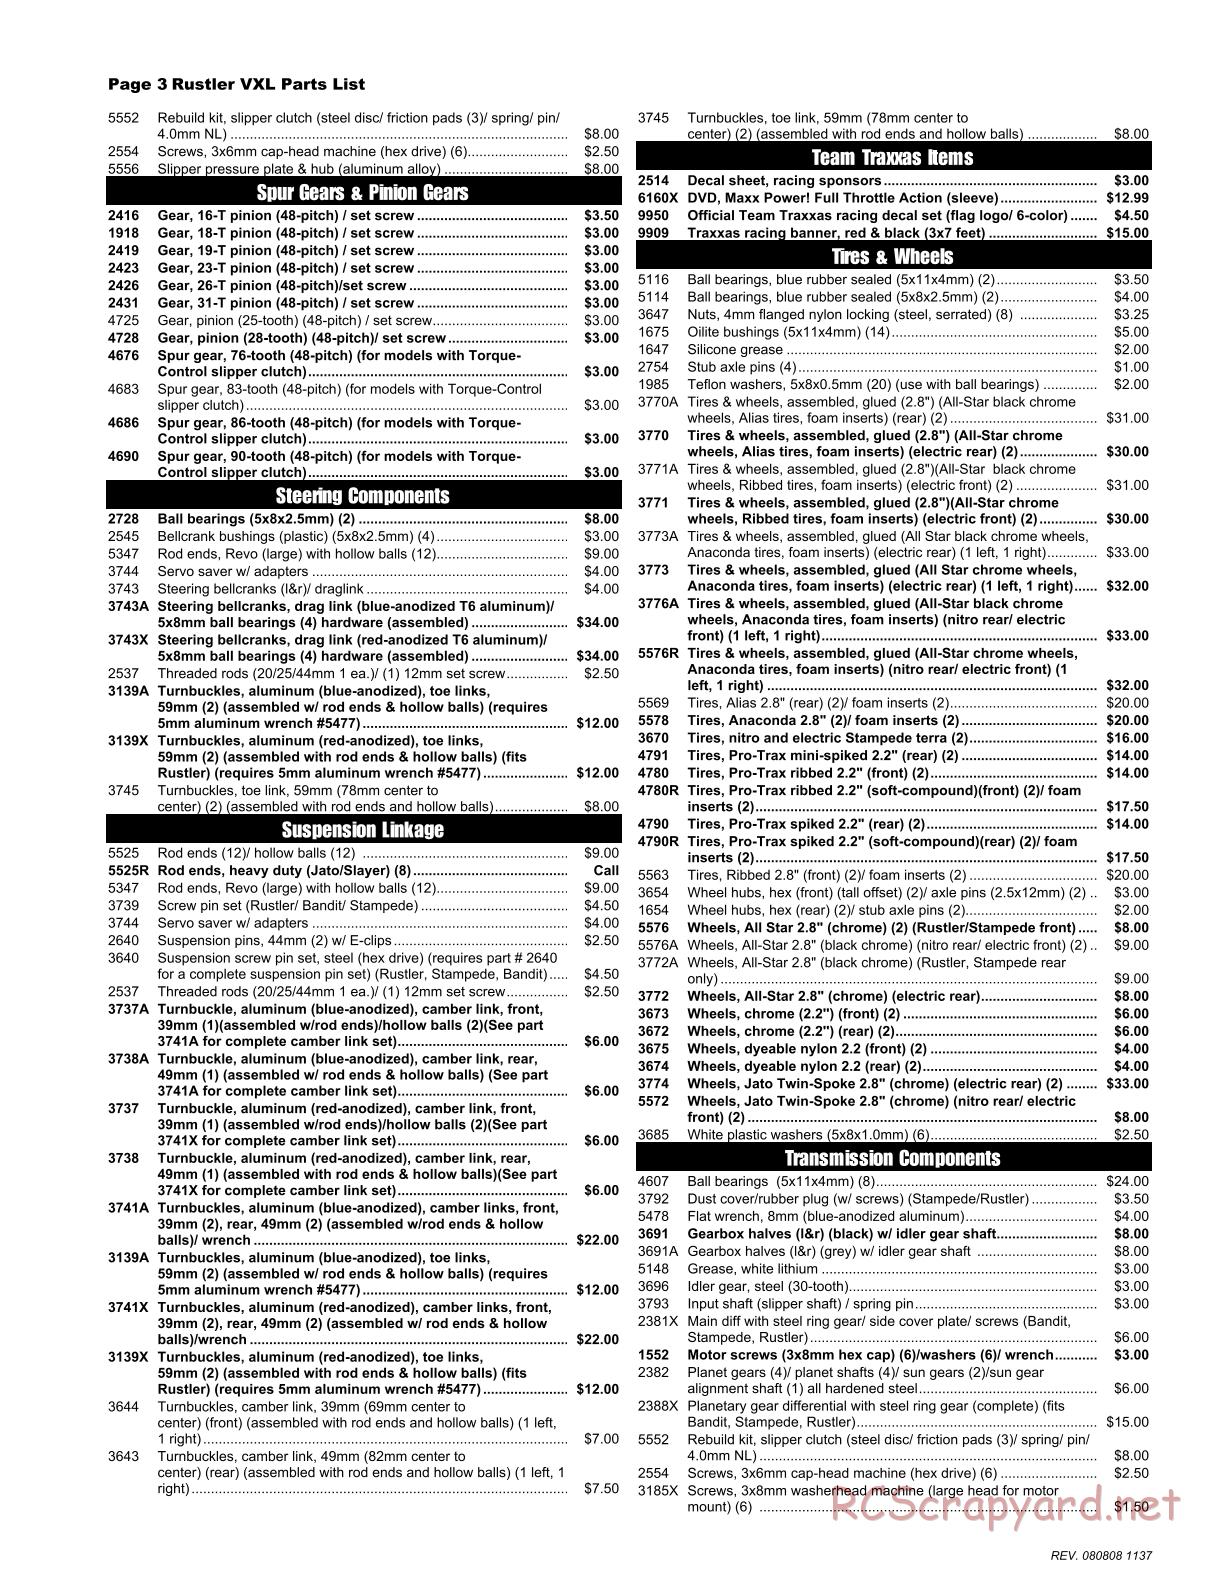 Traxxas - Rustler VXL (2007) - Parts List - Page 3